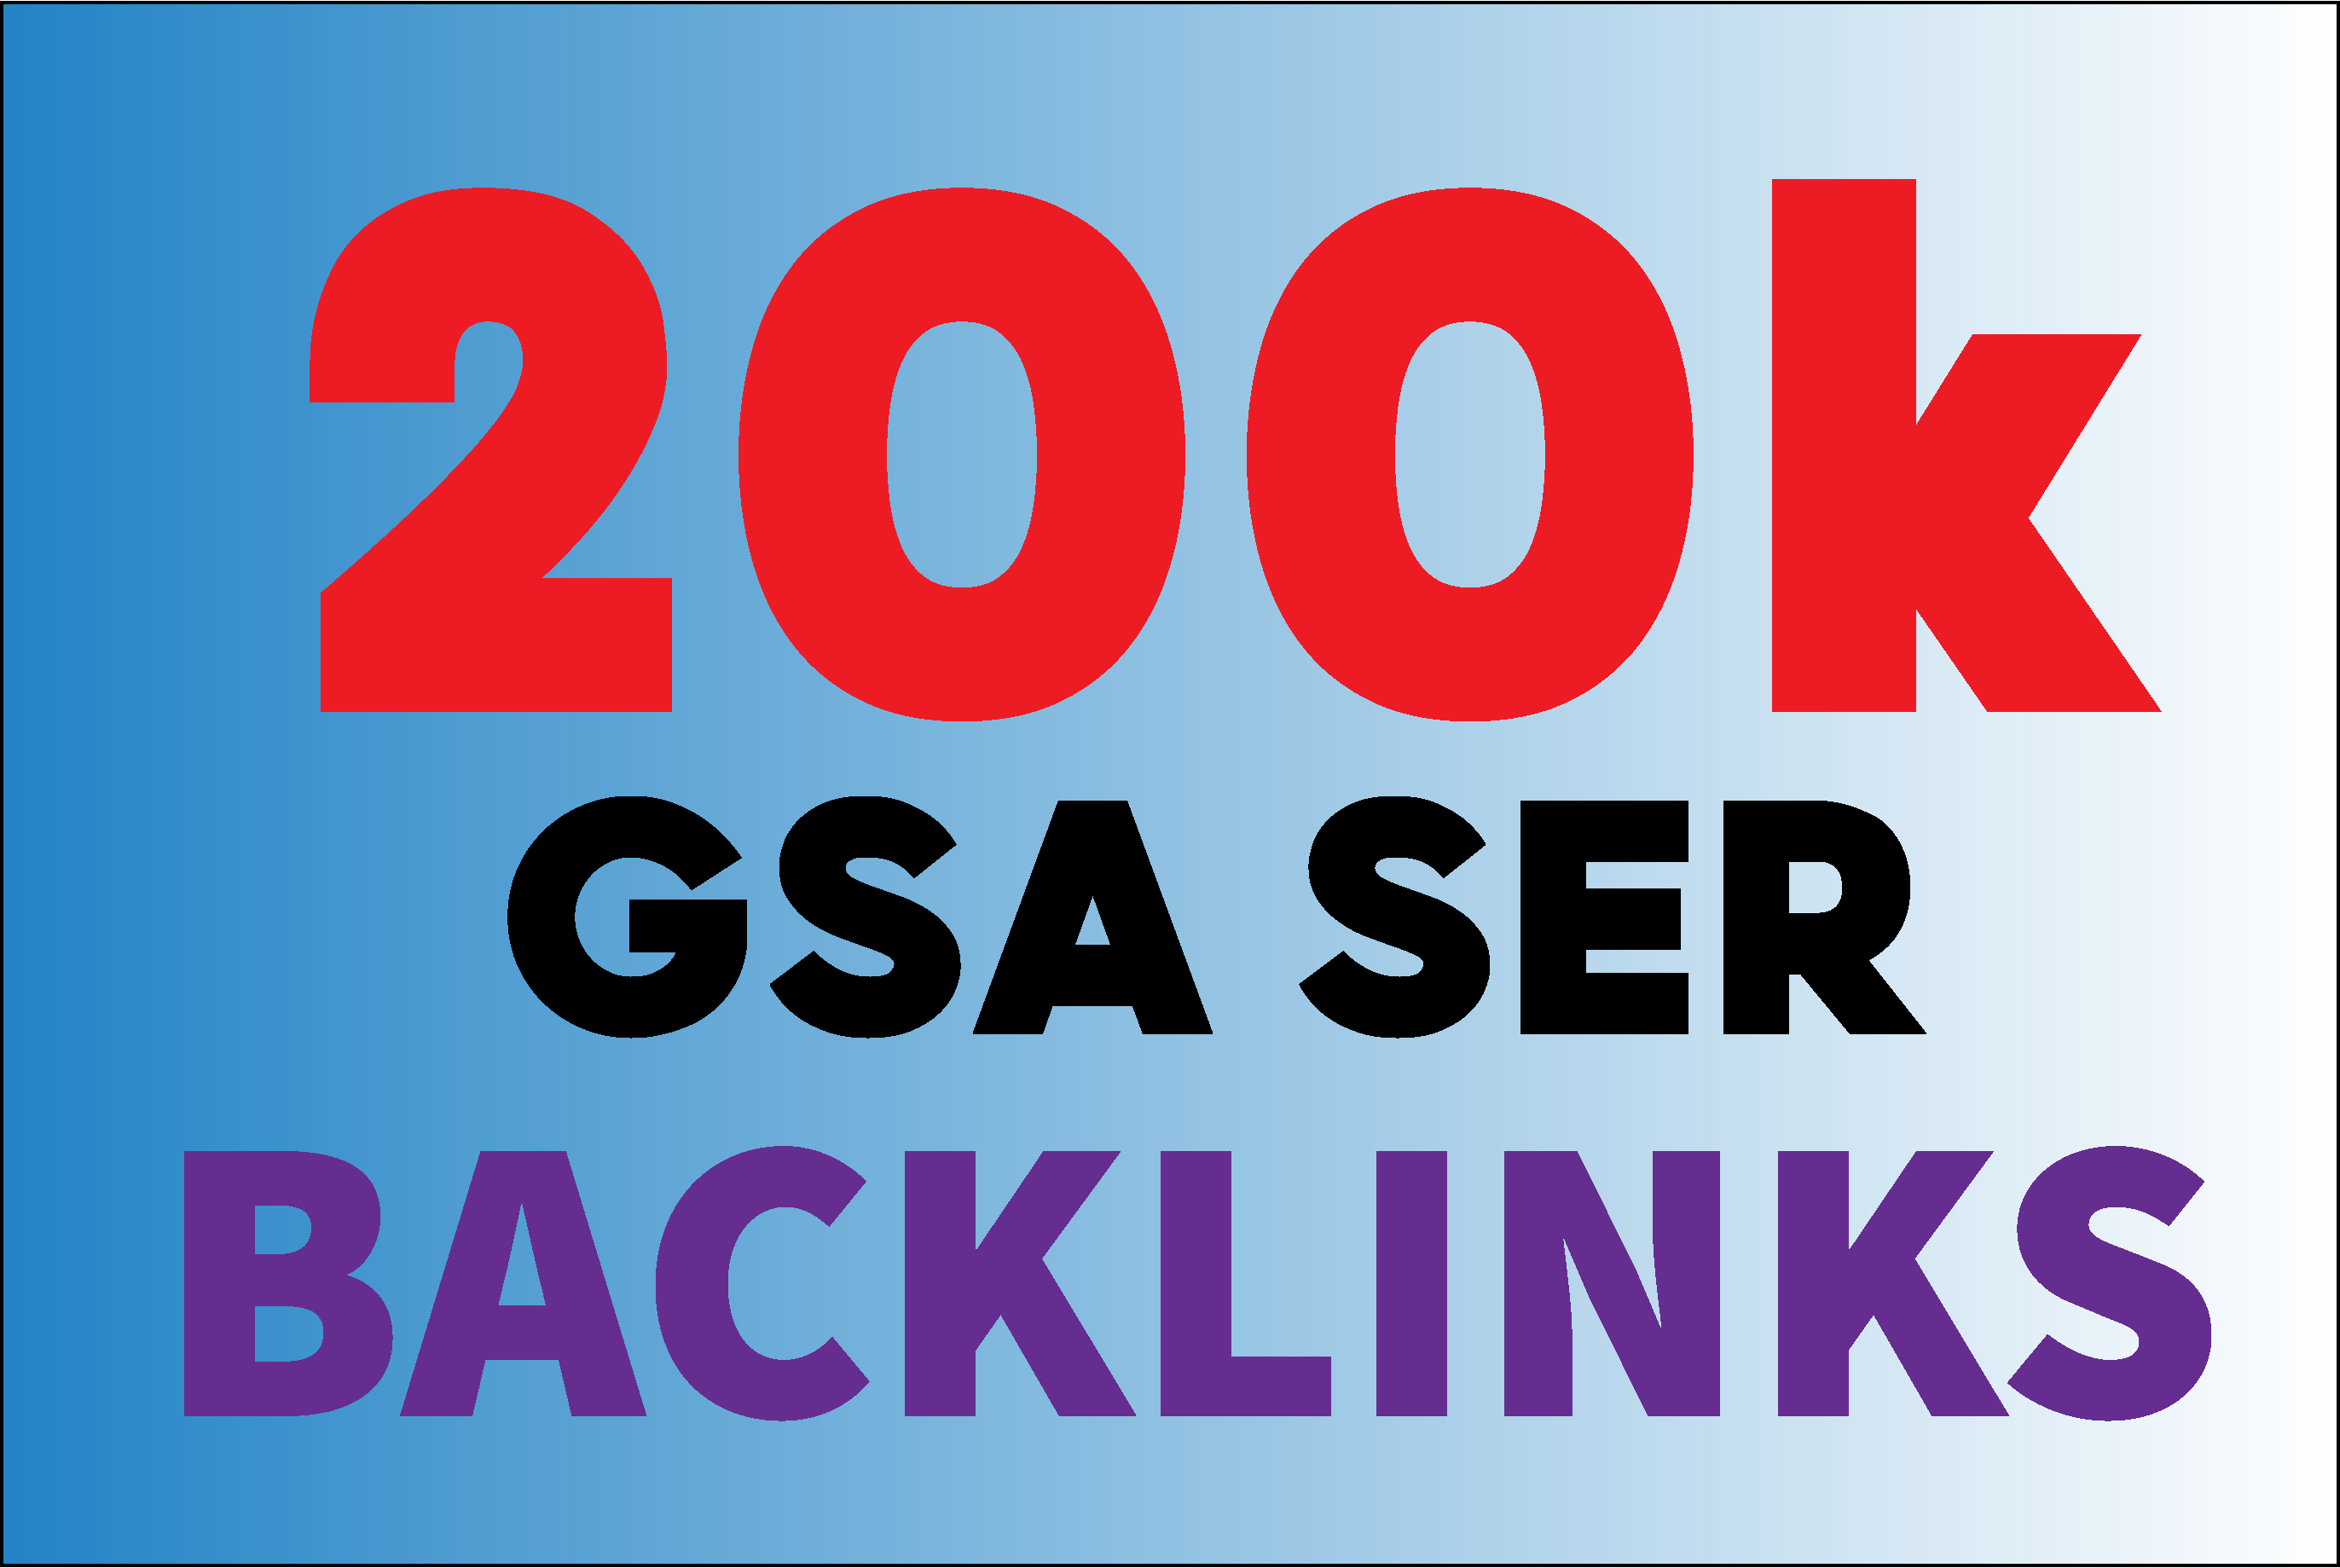 200k GSA SER High Quality & Powerful SEO Backlinks Google Rank First Page